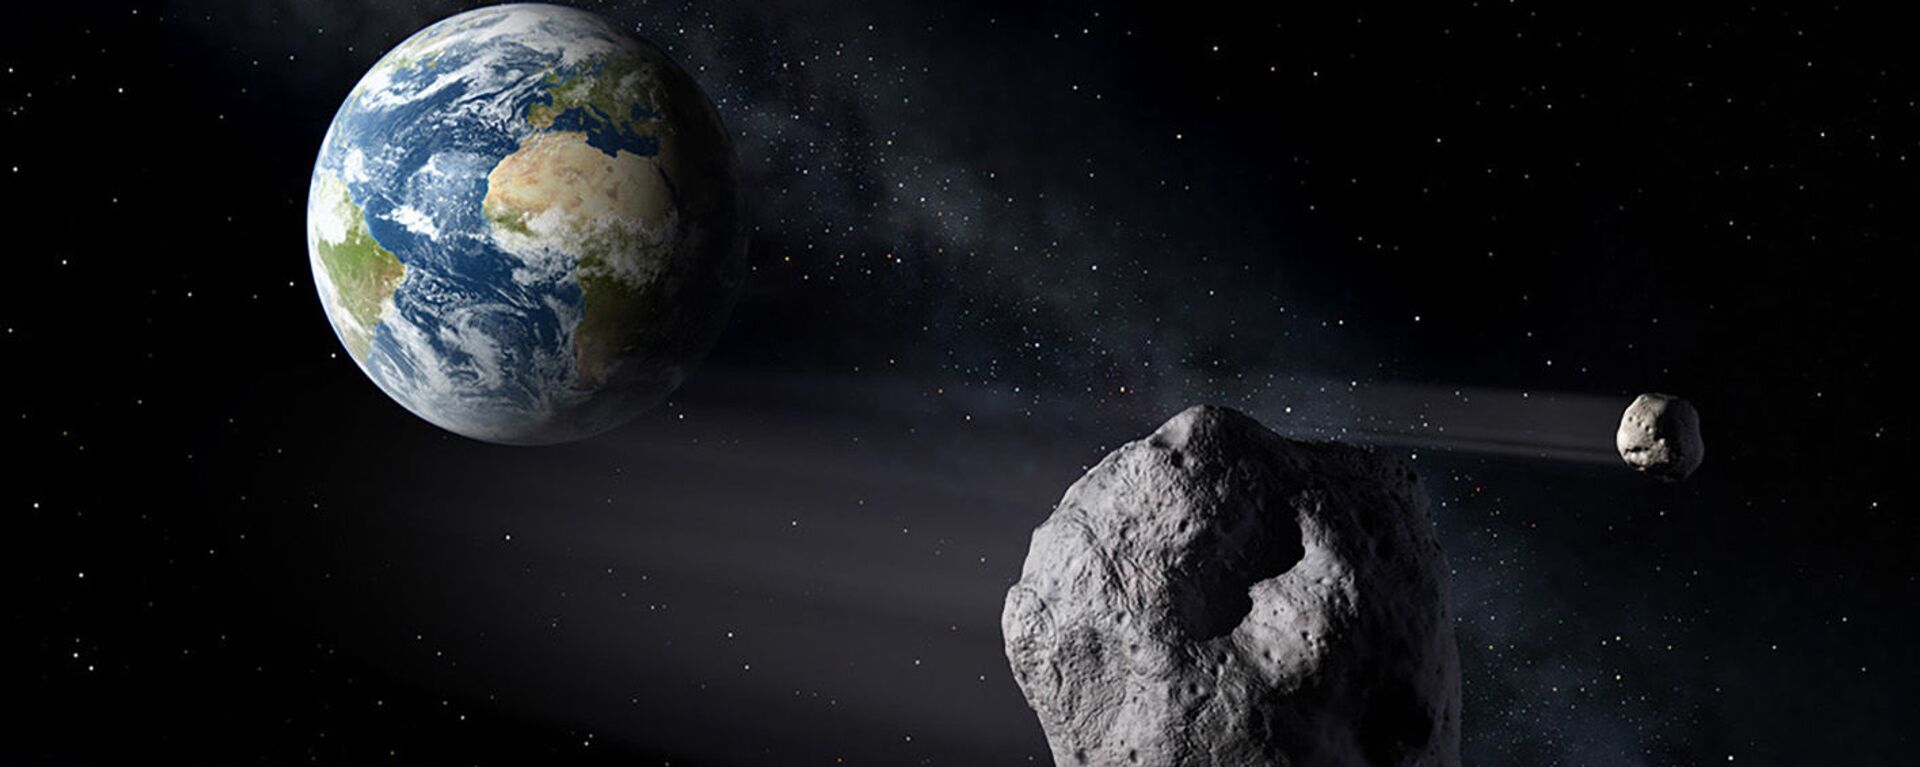 Asteroide aproxima-se da Terra - Sputnik Brasil, 1920, 26.07.2019